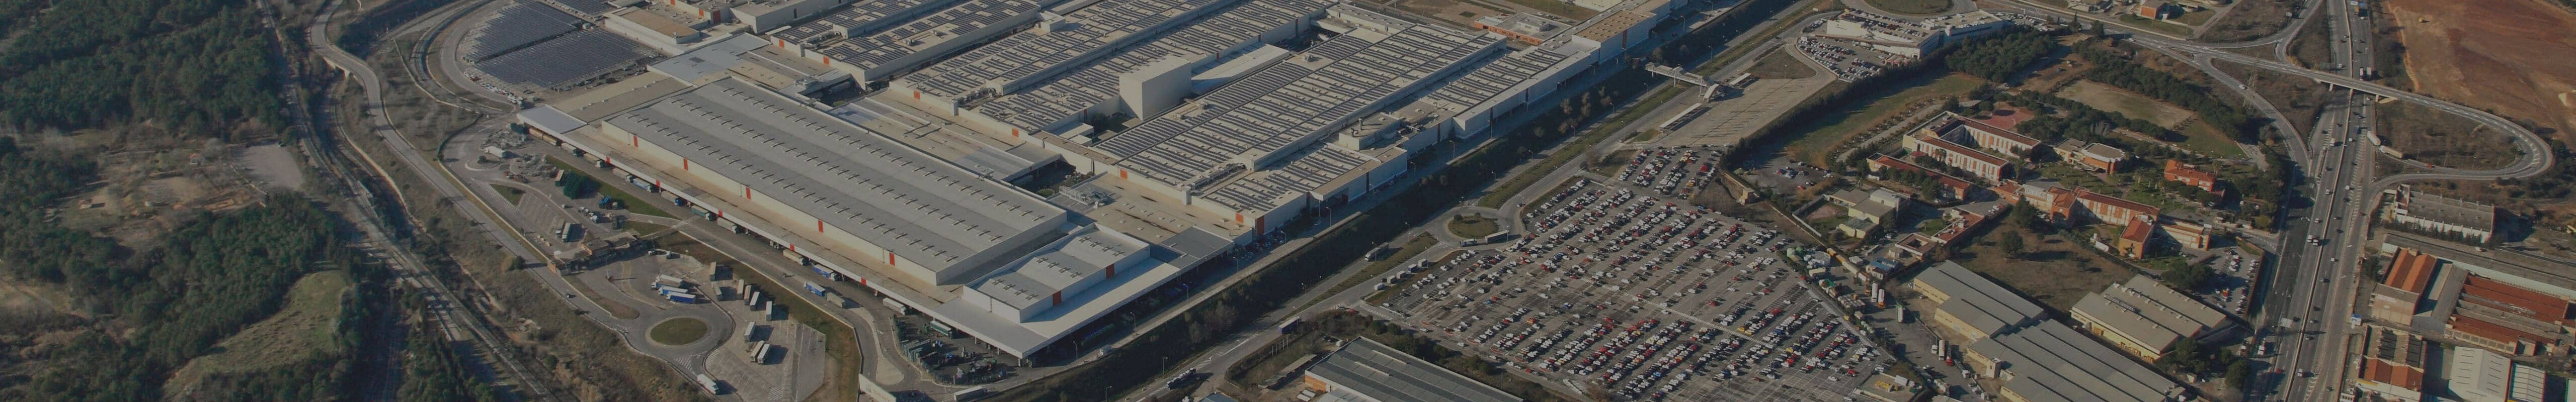 SEAT Ibiza fabriqué à l'usine de Martorell